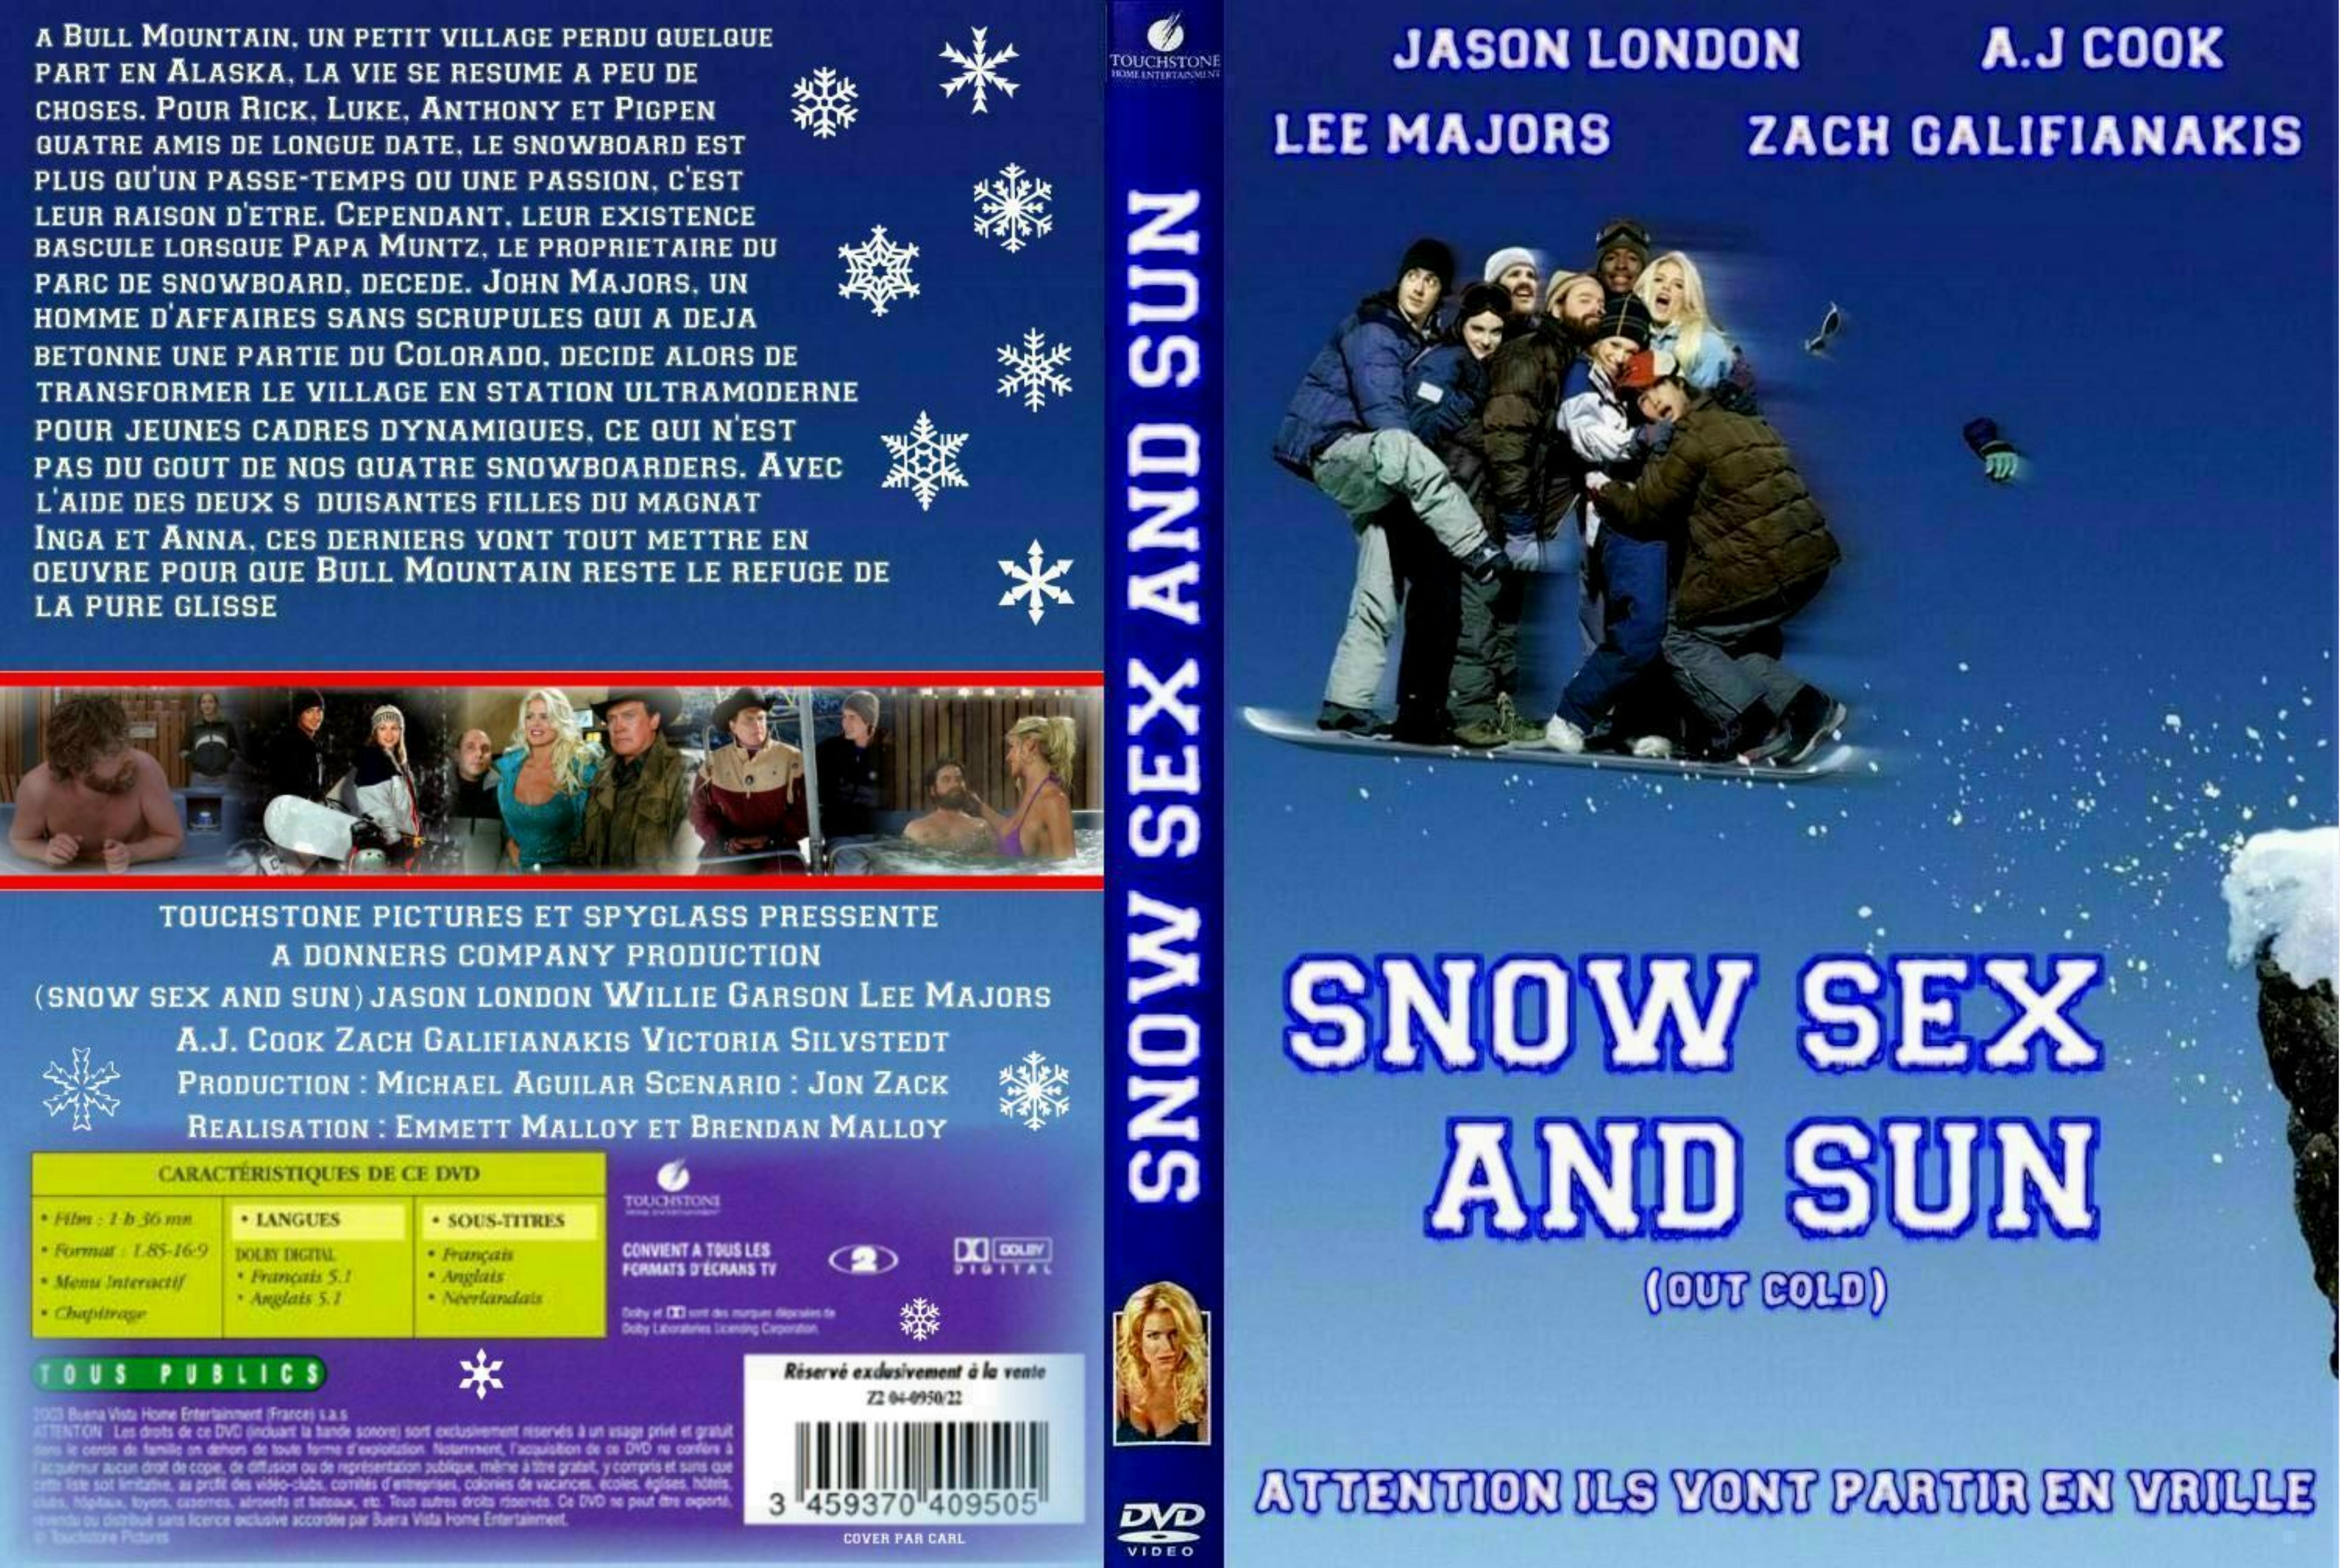 Jaquette DVD snow sex and sun custom